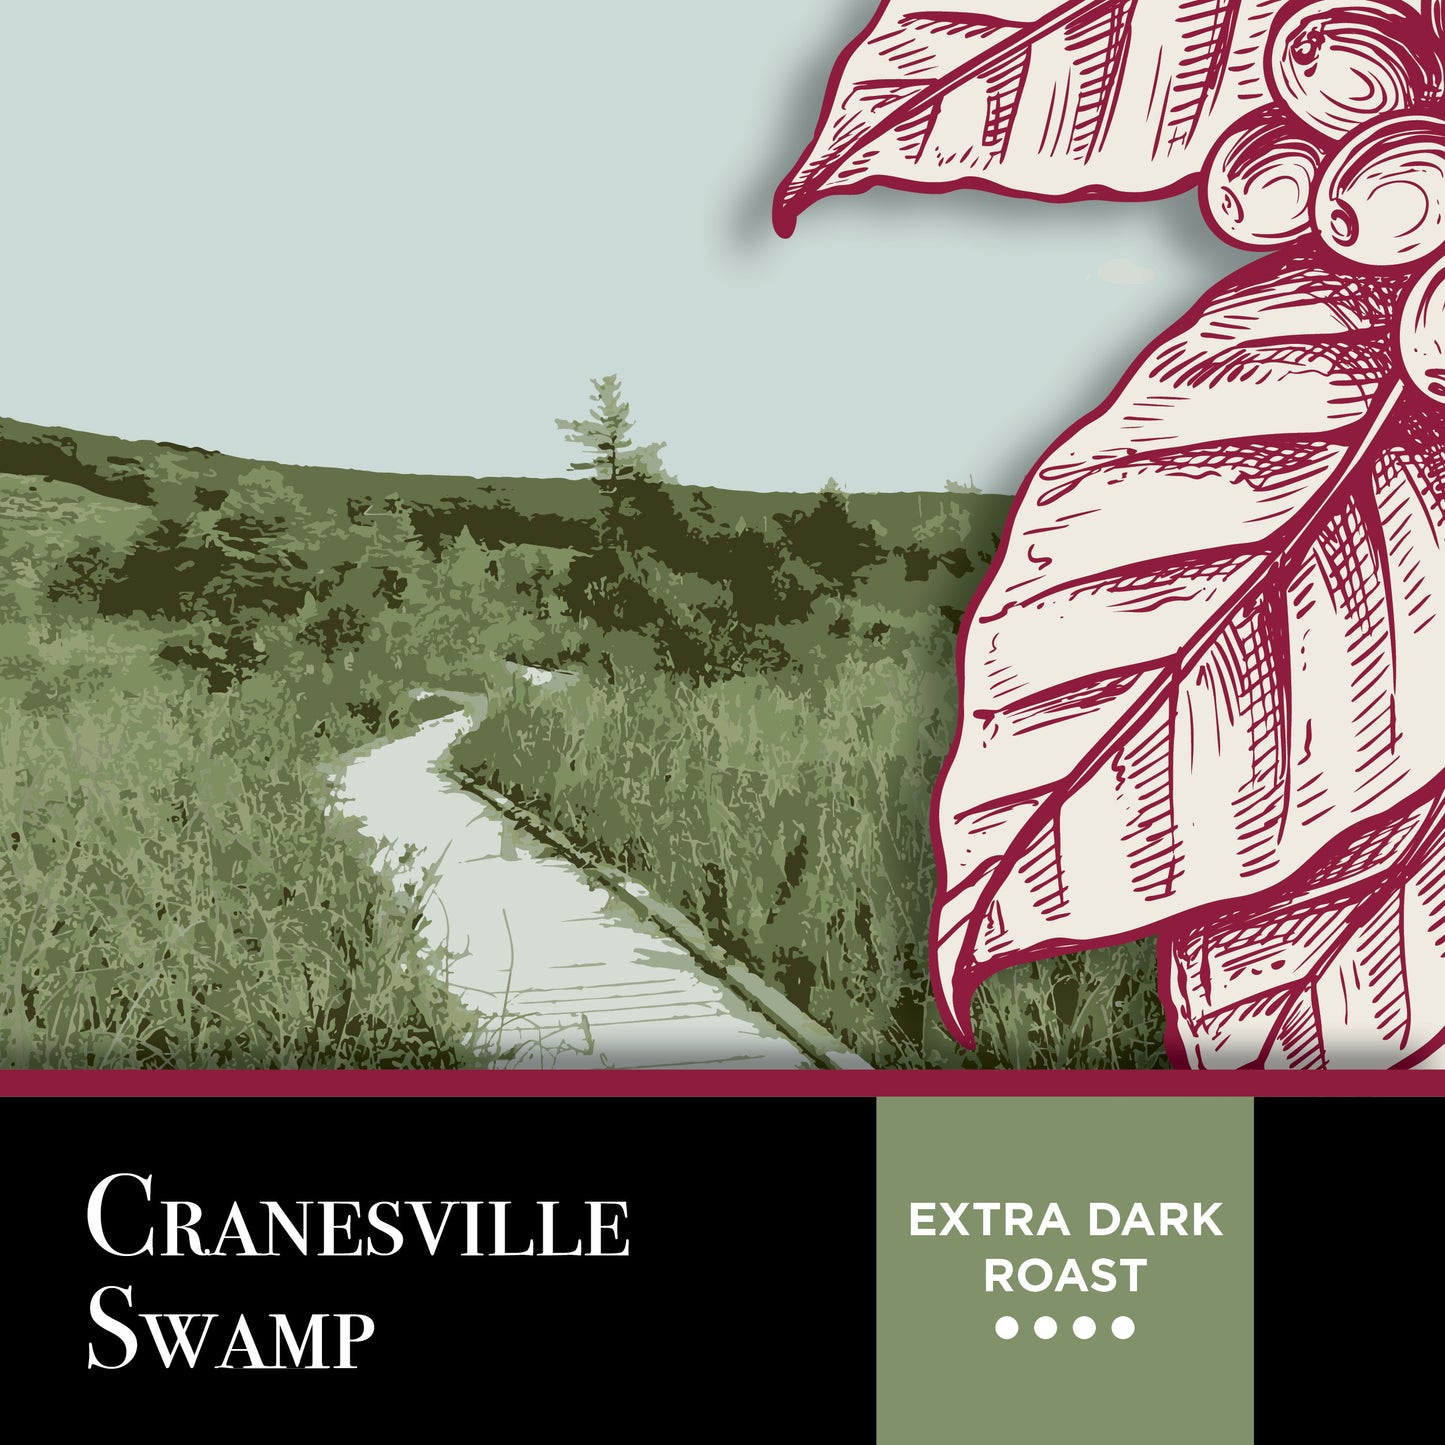 Cranesville Swamp Extra Dark Roast